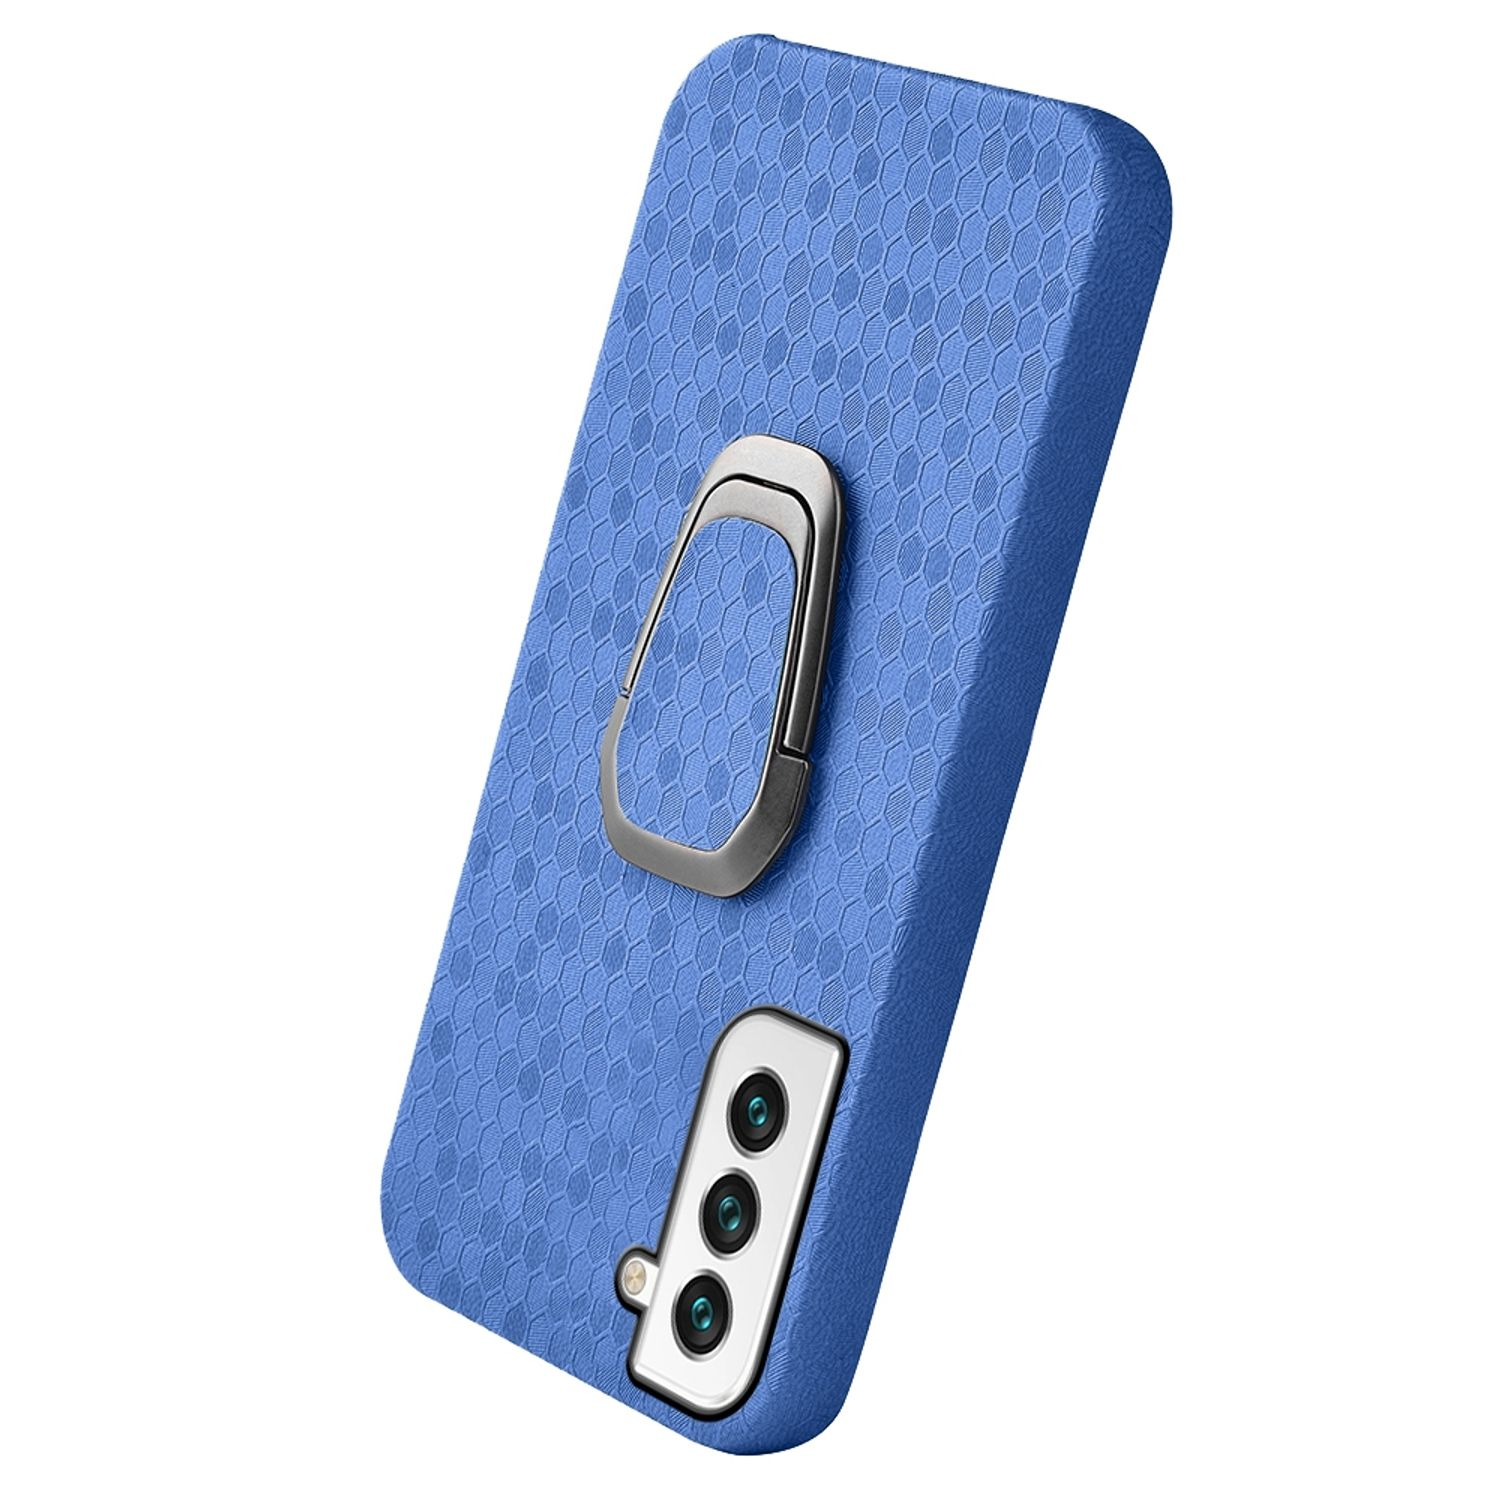 Navy Case, S22 Blau KÖNIG Samsung, Galaxy 5G, Backcover, DESIGN